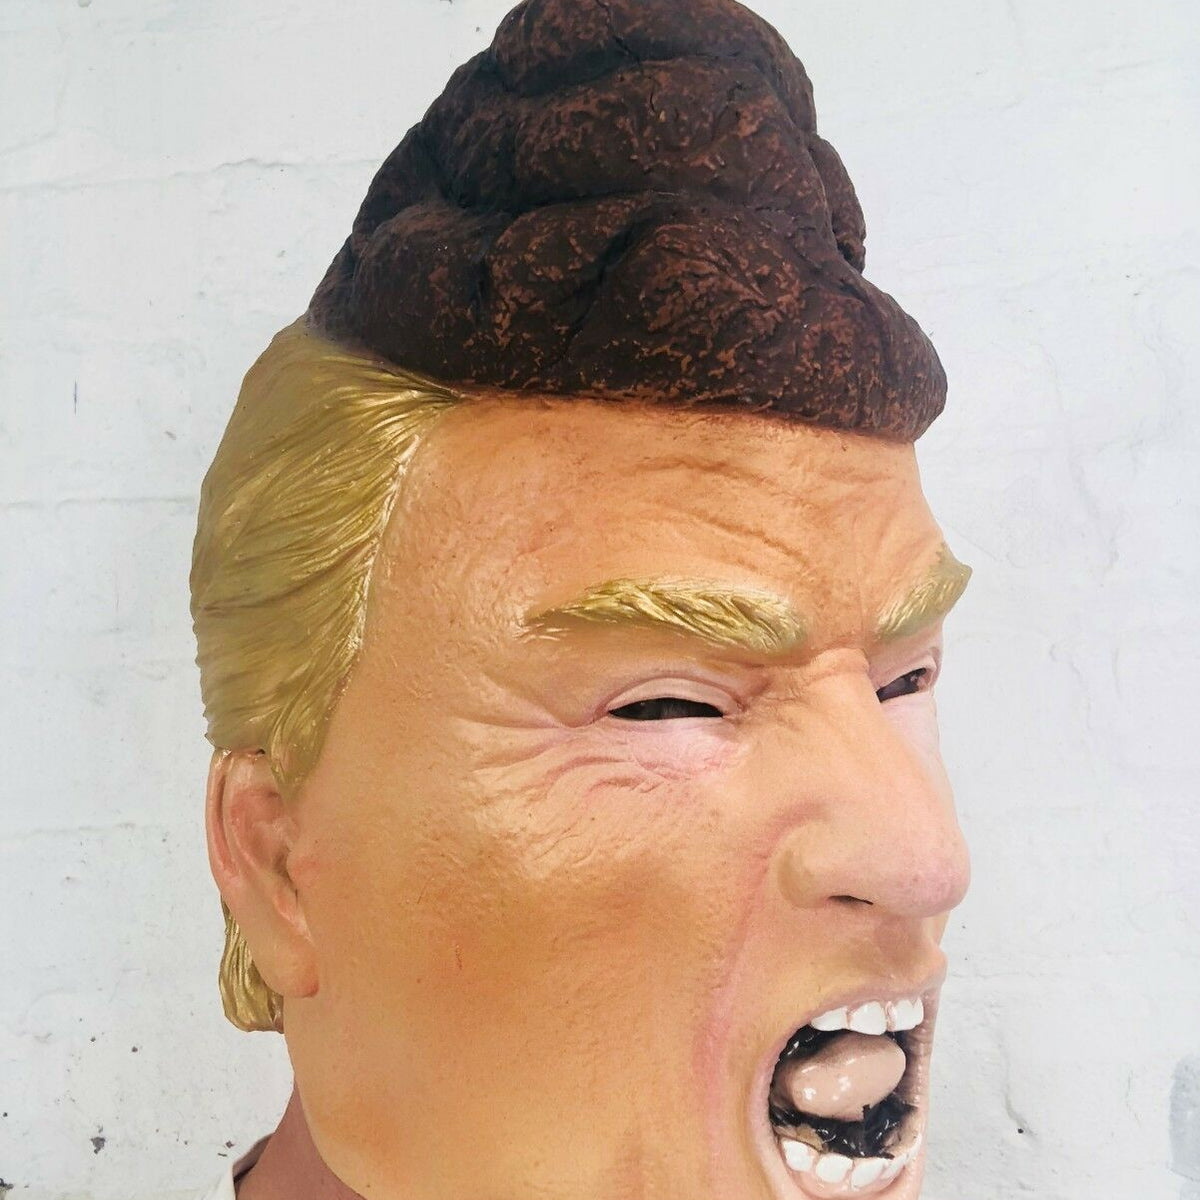 Donald Trump Poo-Kopfmaske